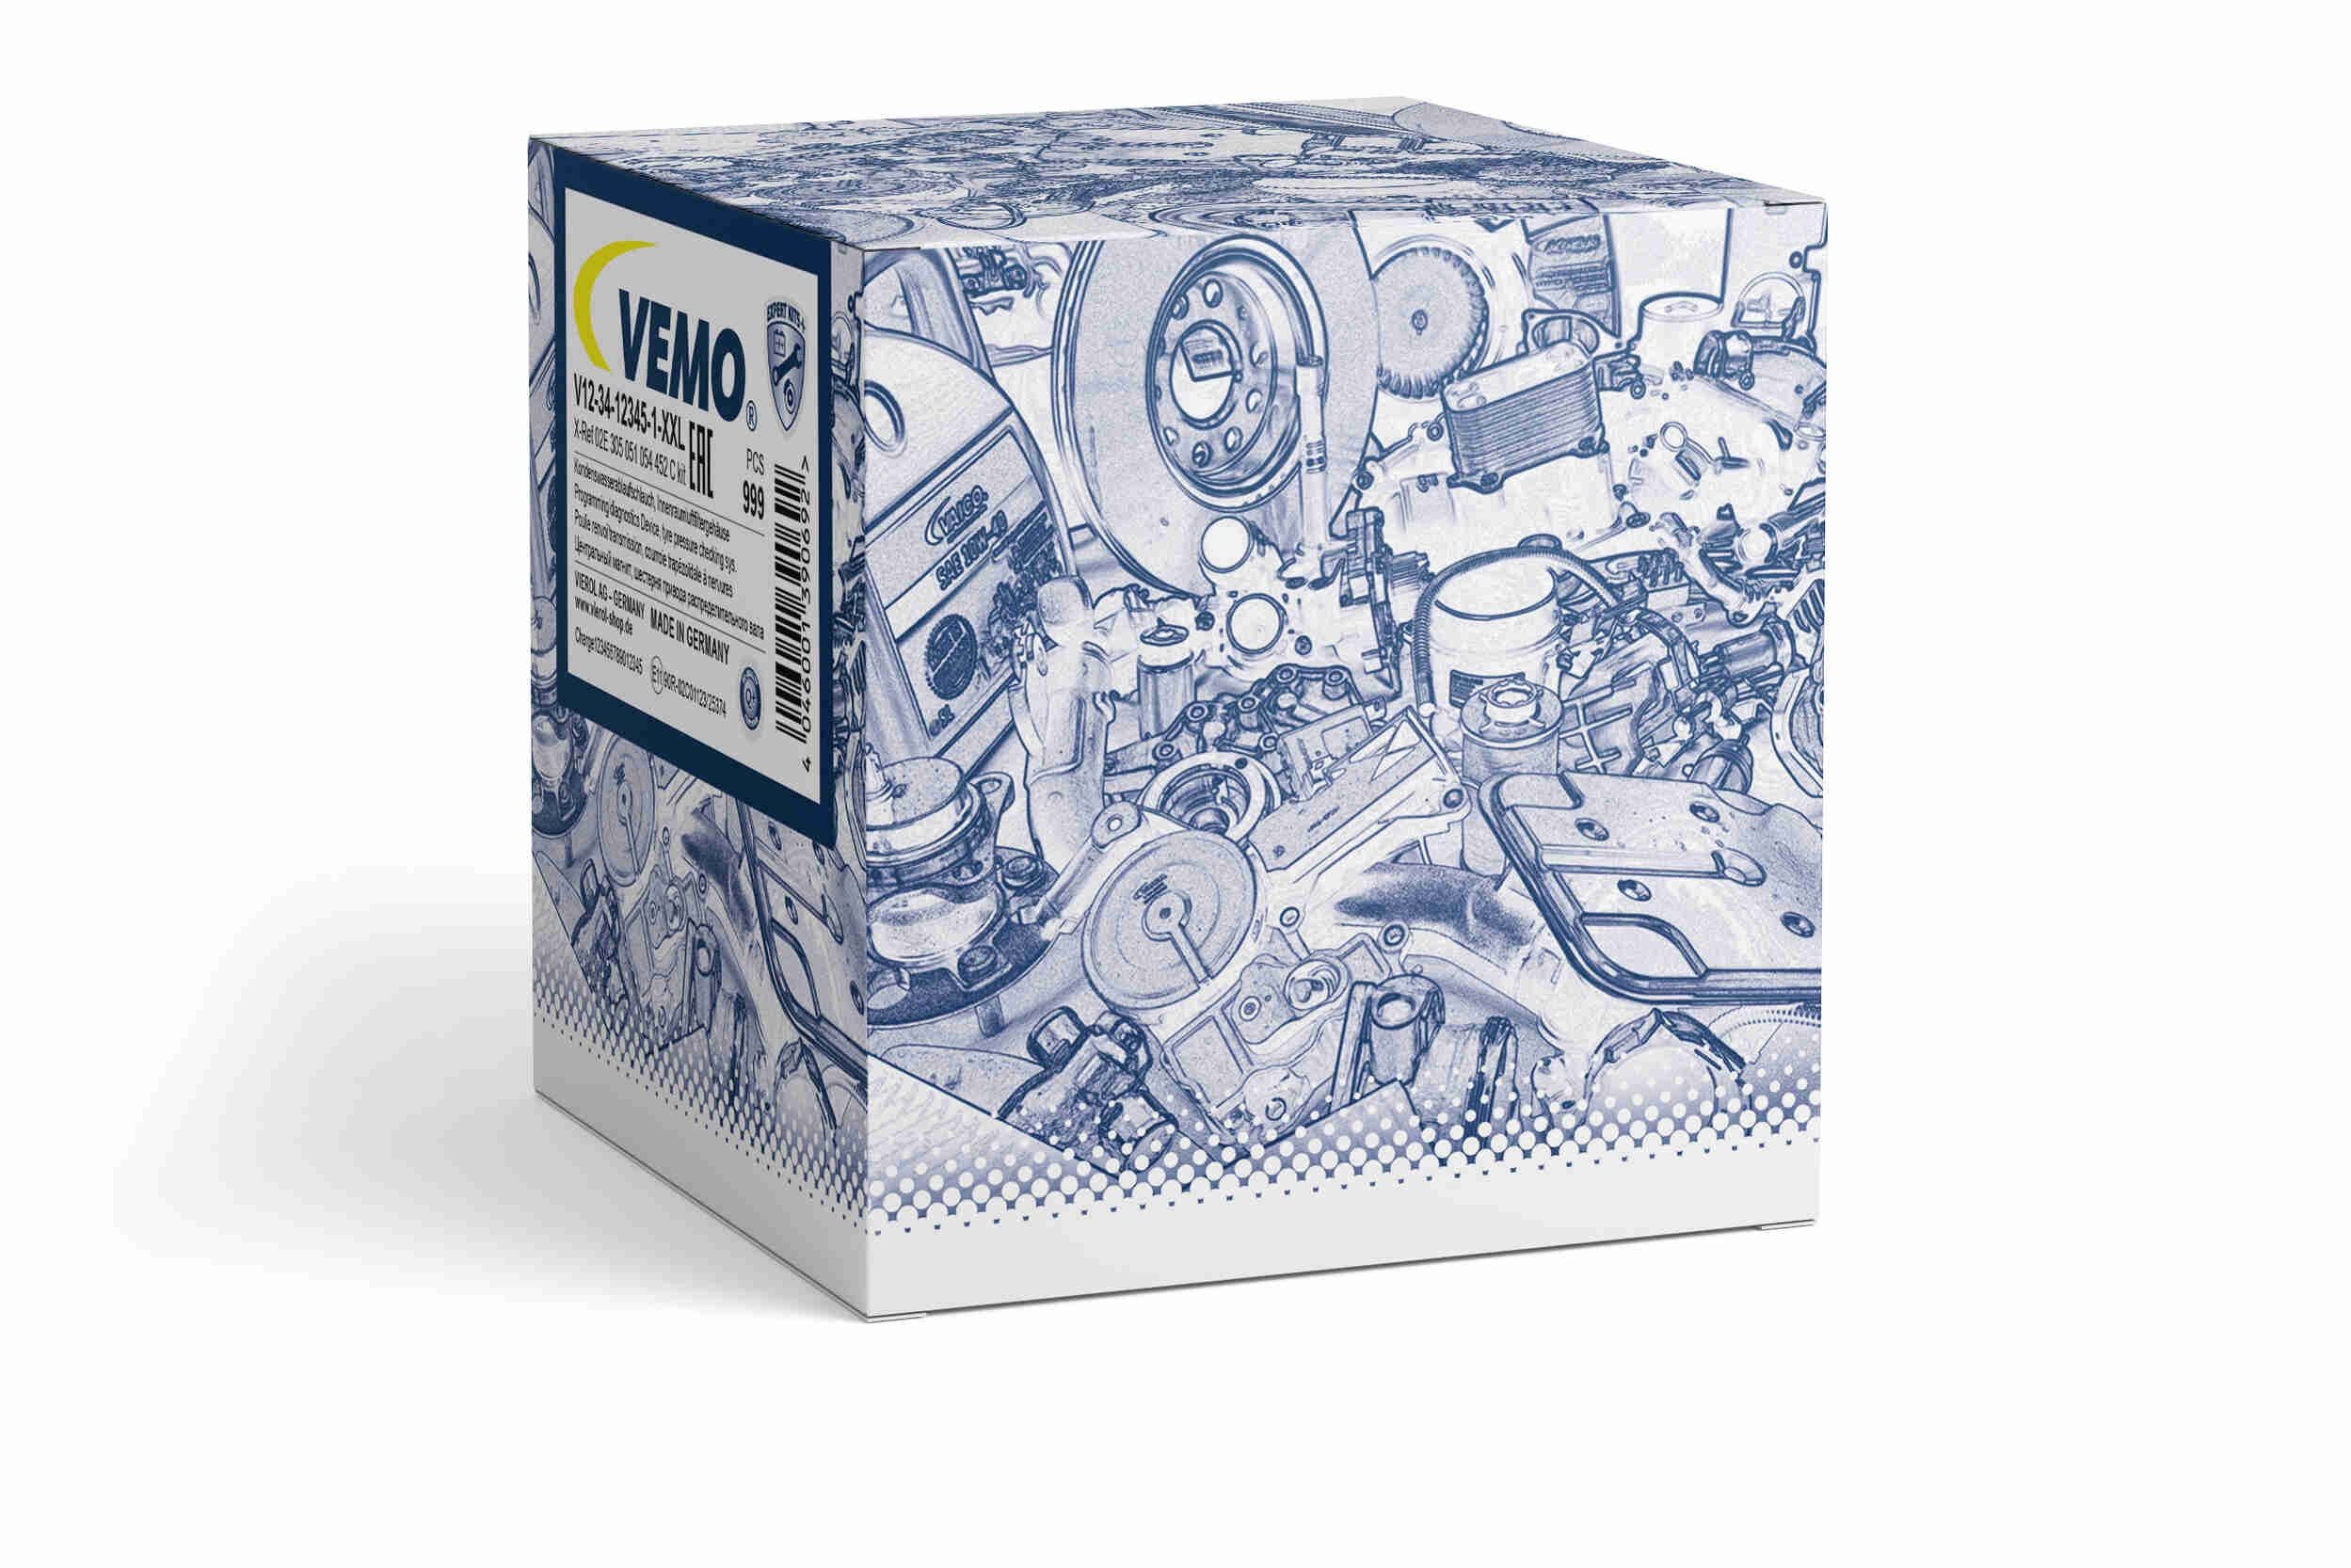 VEMO V20-72-1365 Sensor, Xenon light (headlight range adjustment) Rear Axle, Q+, original equipment manufacturer quality MADE IN GERMANY